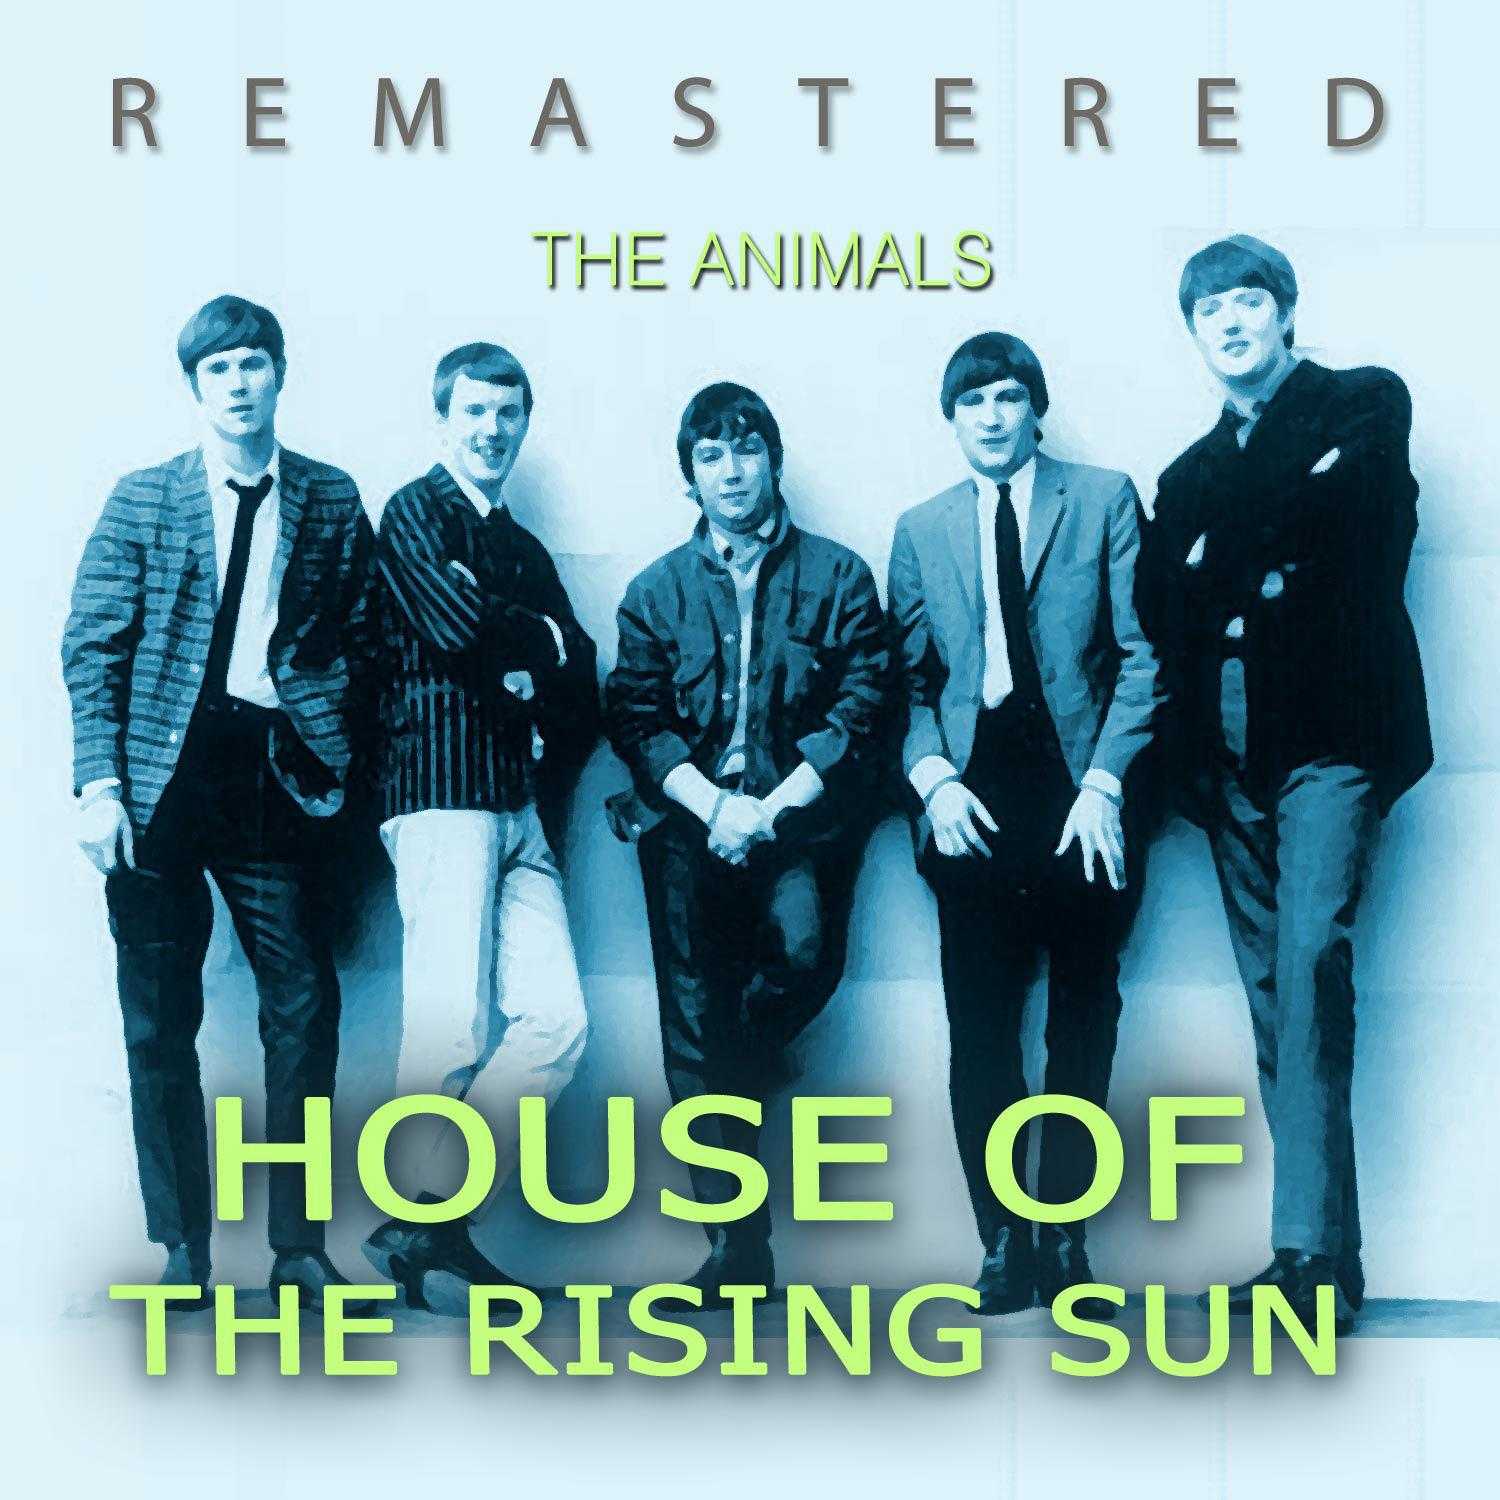 Зе энималс. Animals the House of the Rising Sun альбом. The animals House of the Rising Sun обложка. Animal House. Группа the animals дом восходящего солнца.